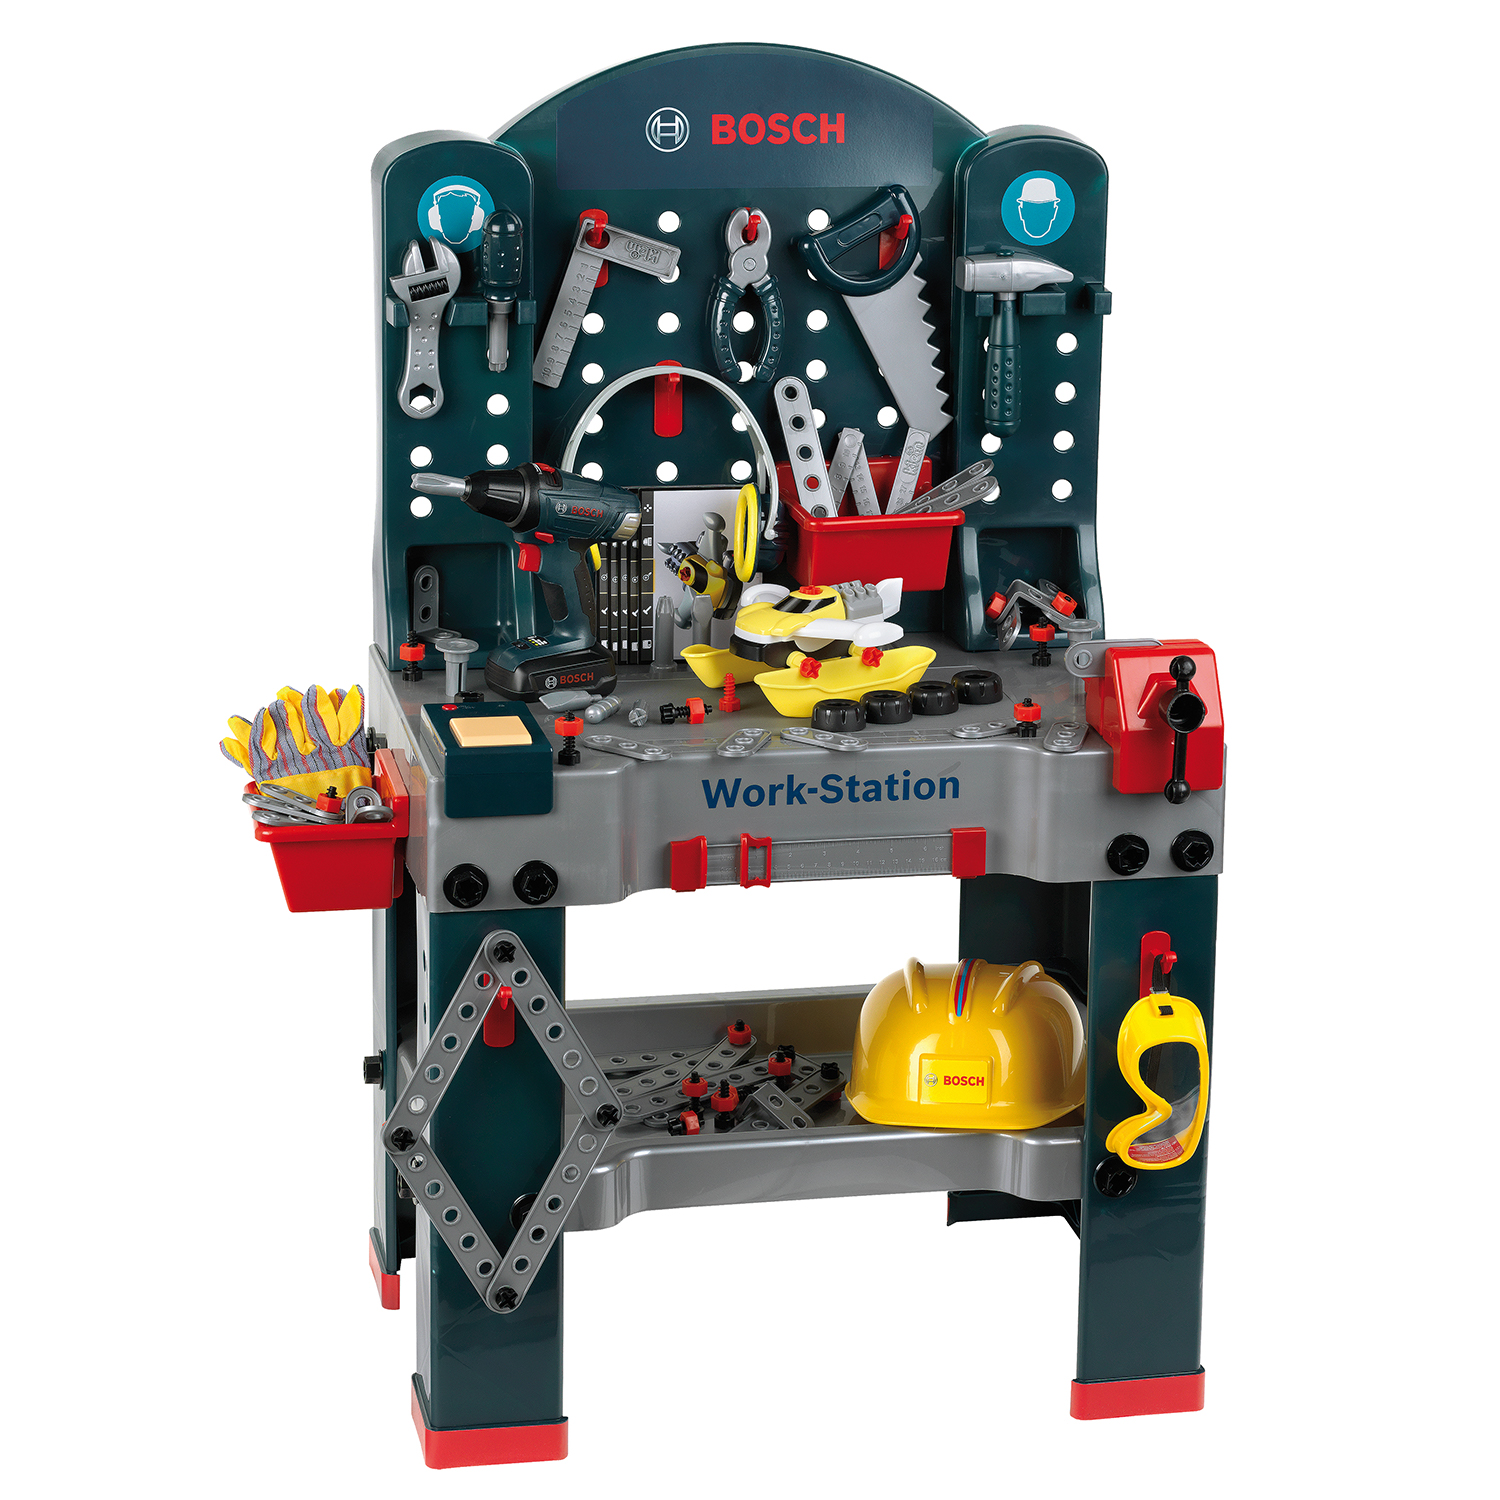 Theo Klein Bosch Jumbo Work Station Workbench DIY Children's Toy Toolset - image 1 of 6